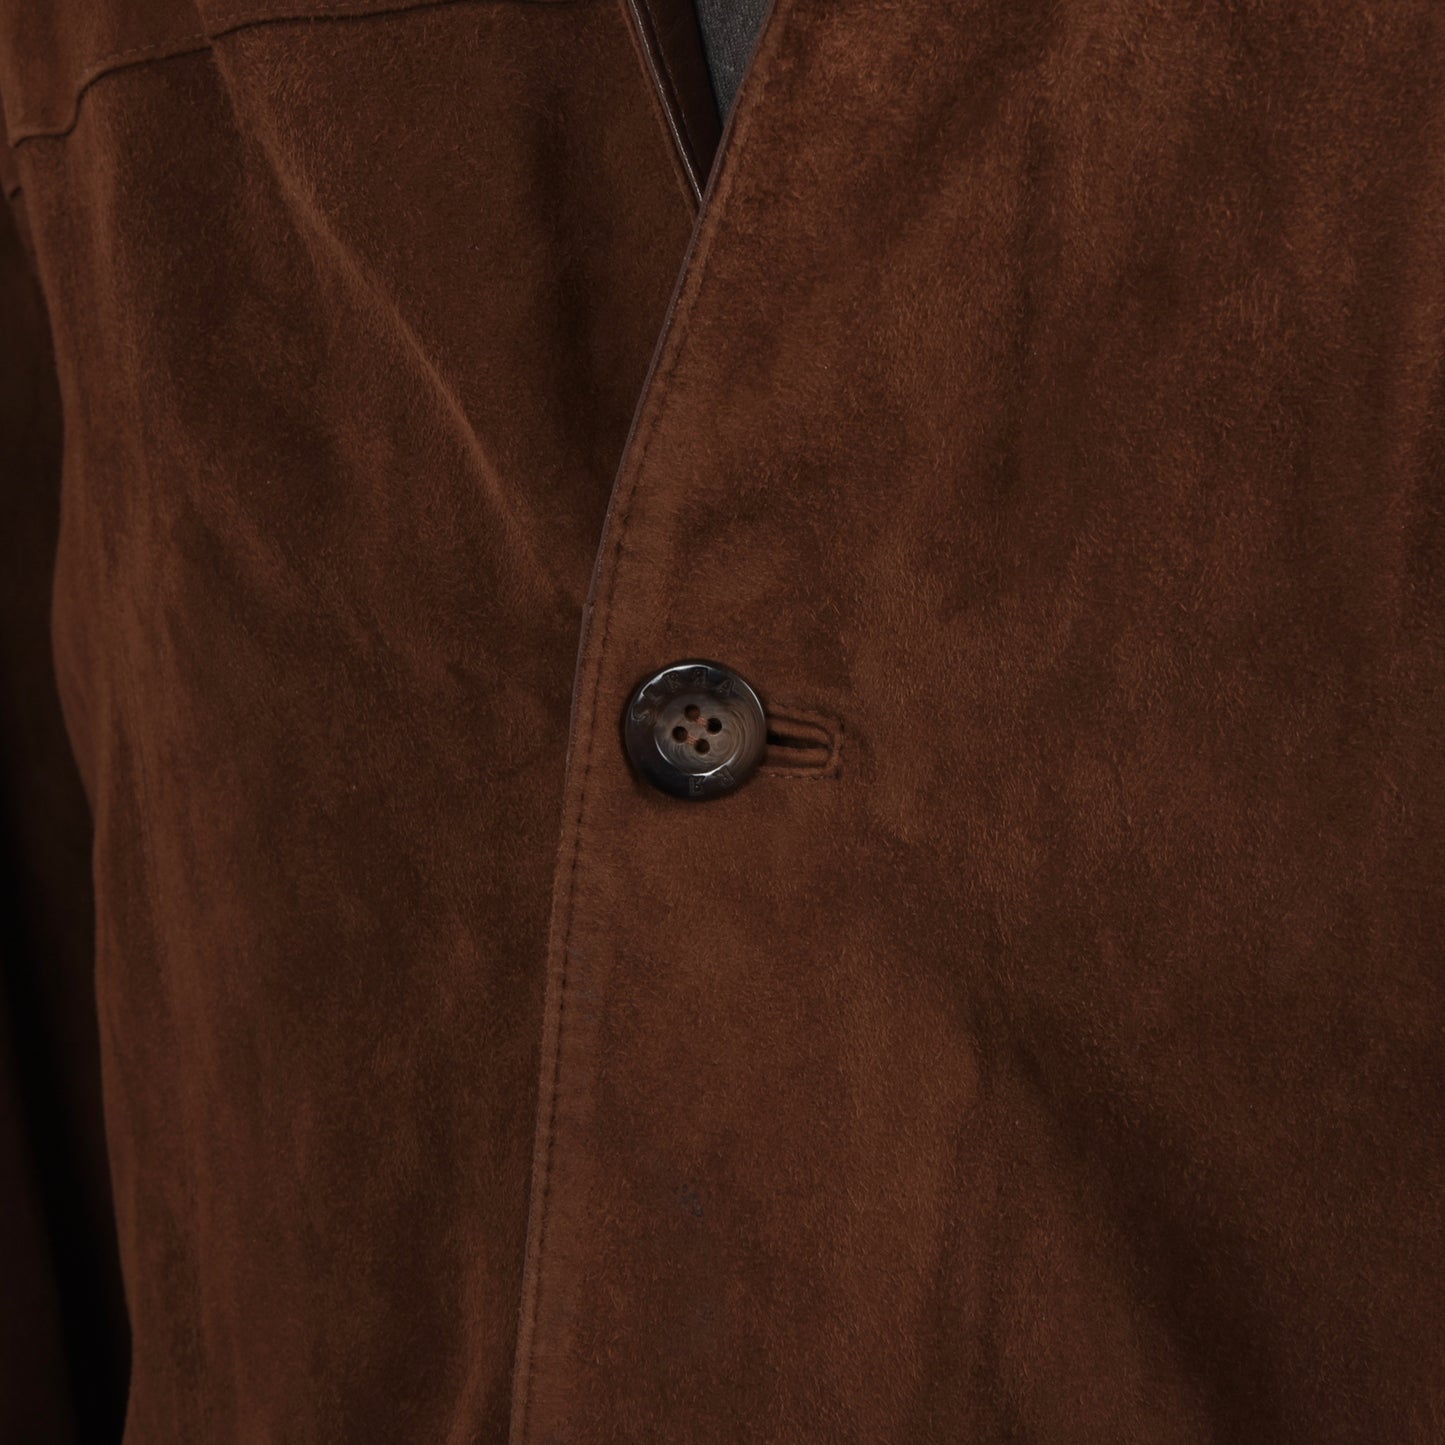 Serra by Torras Suede Jacket Size 58 - Tobacco Brown